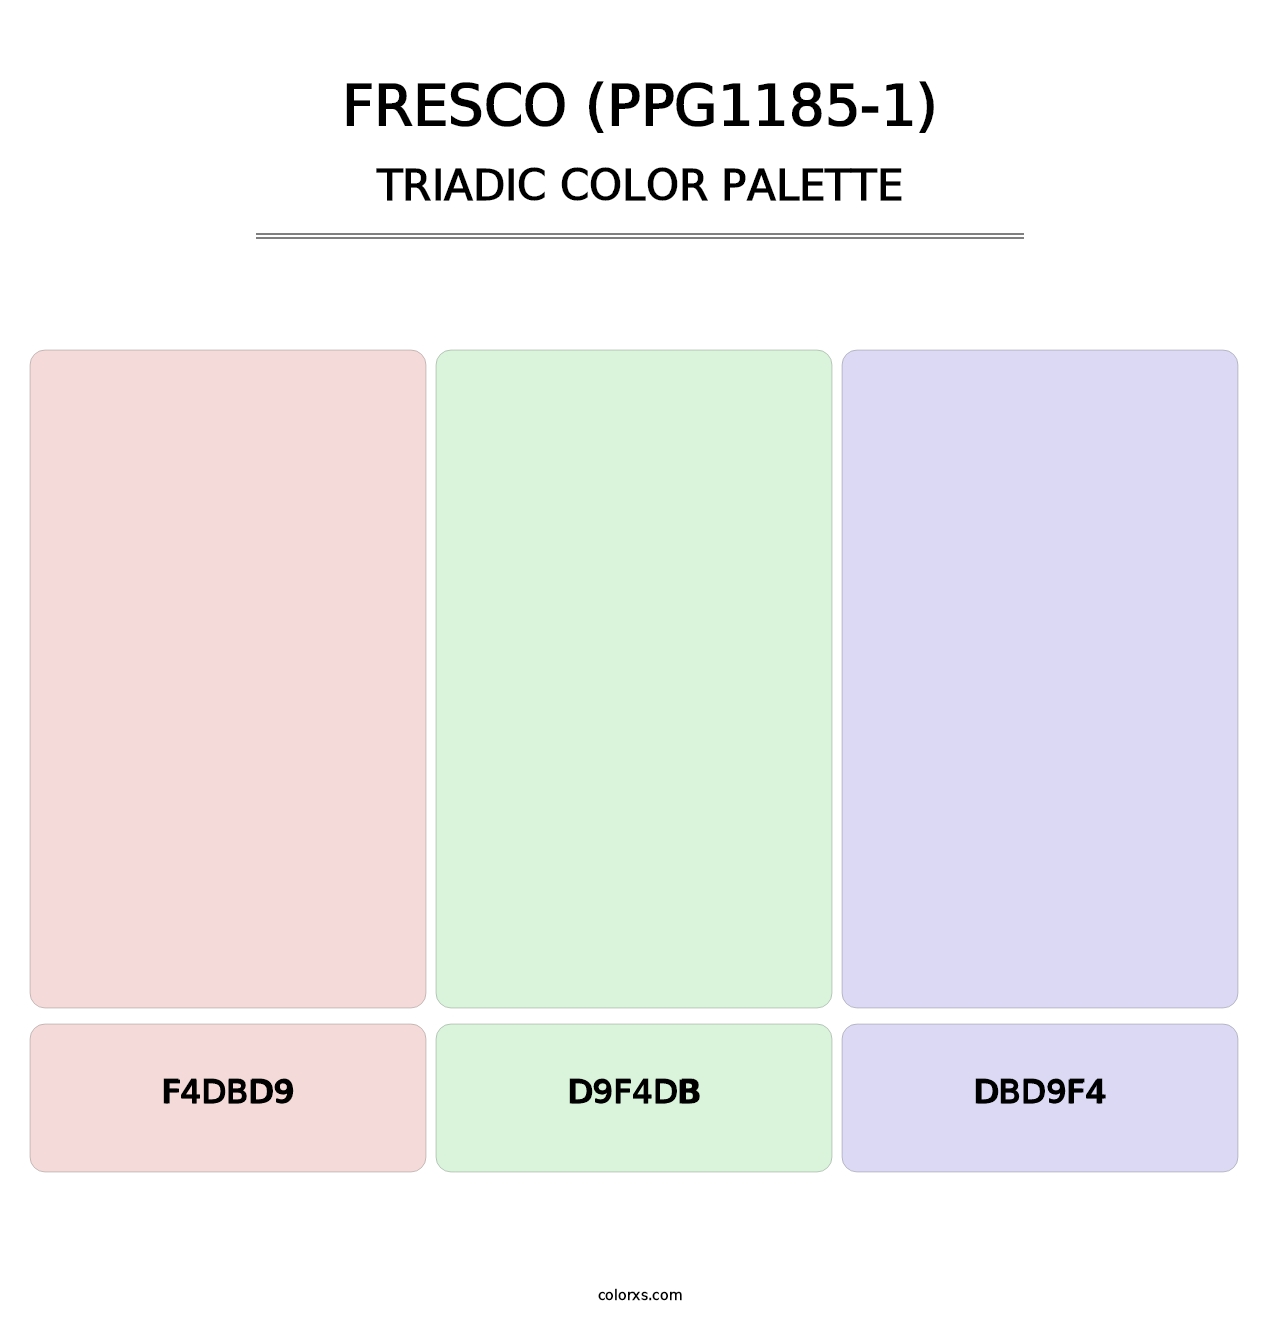 Fresco (PPG1185-1) - Triadic Color Palette